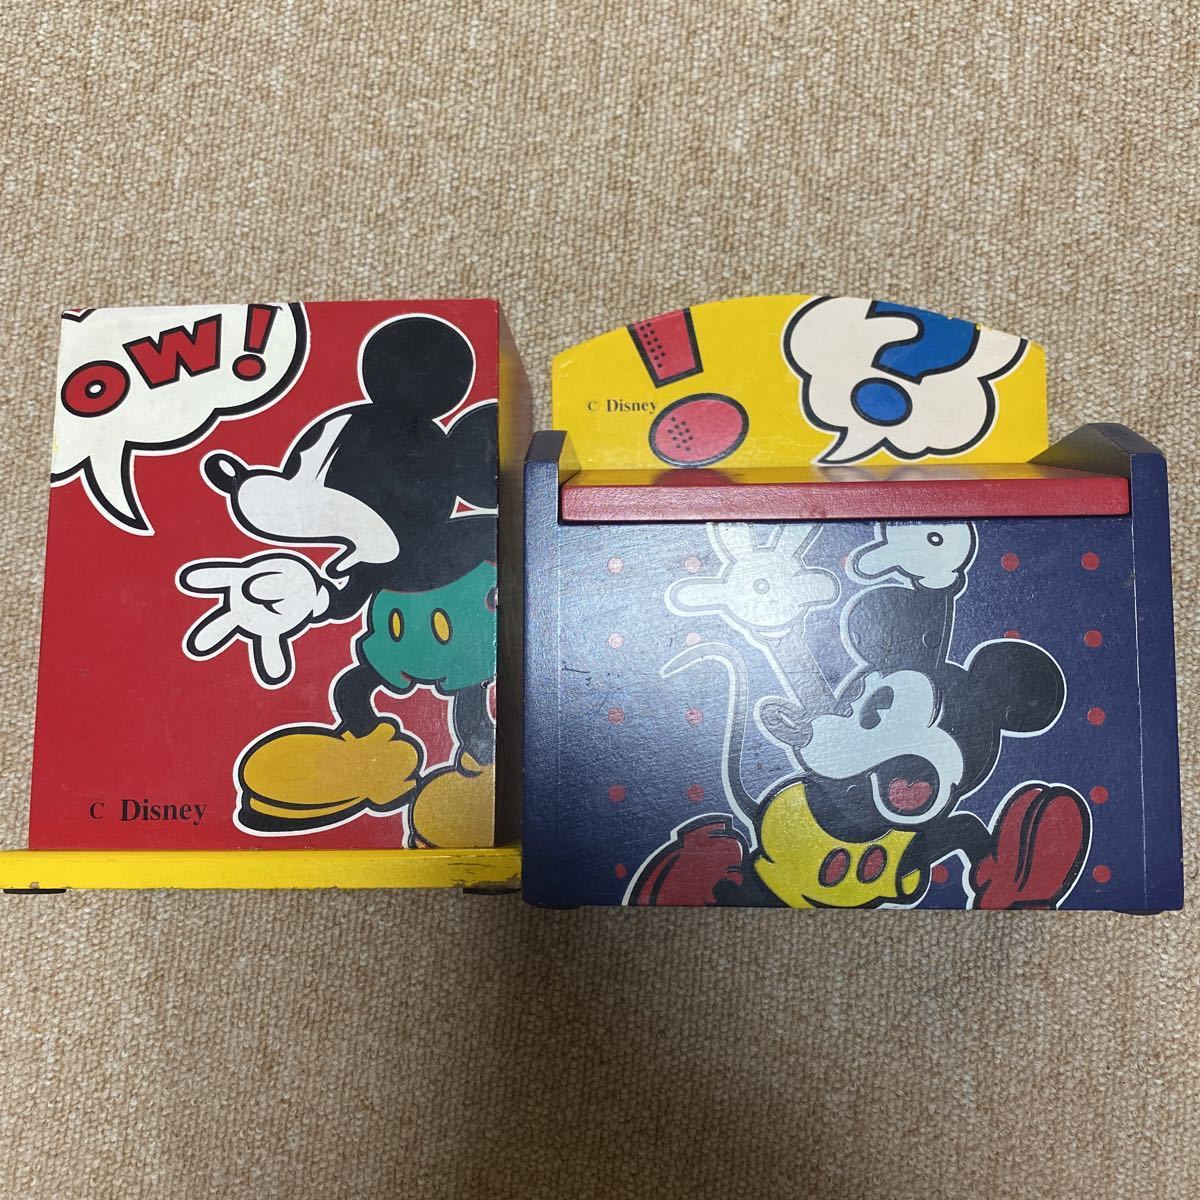 Extreme Rare Disney Shop Limited Time Set Set 2 штуки 2 штуки Микки Минни Вуд -коробка интерьер Viganity Limited Предметы